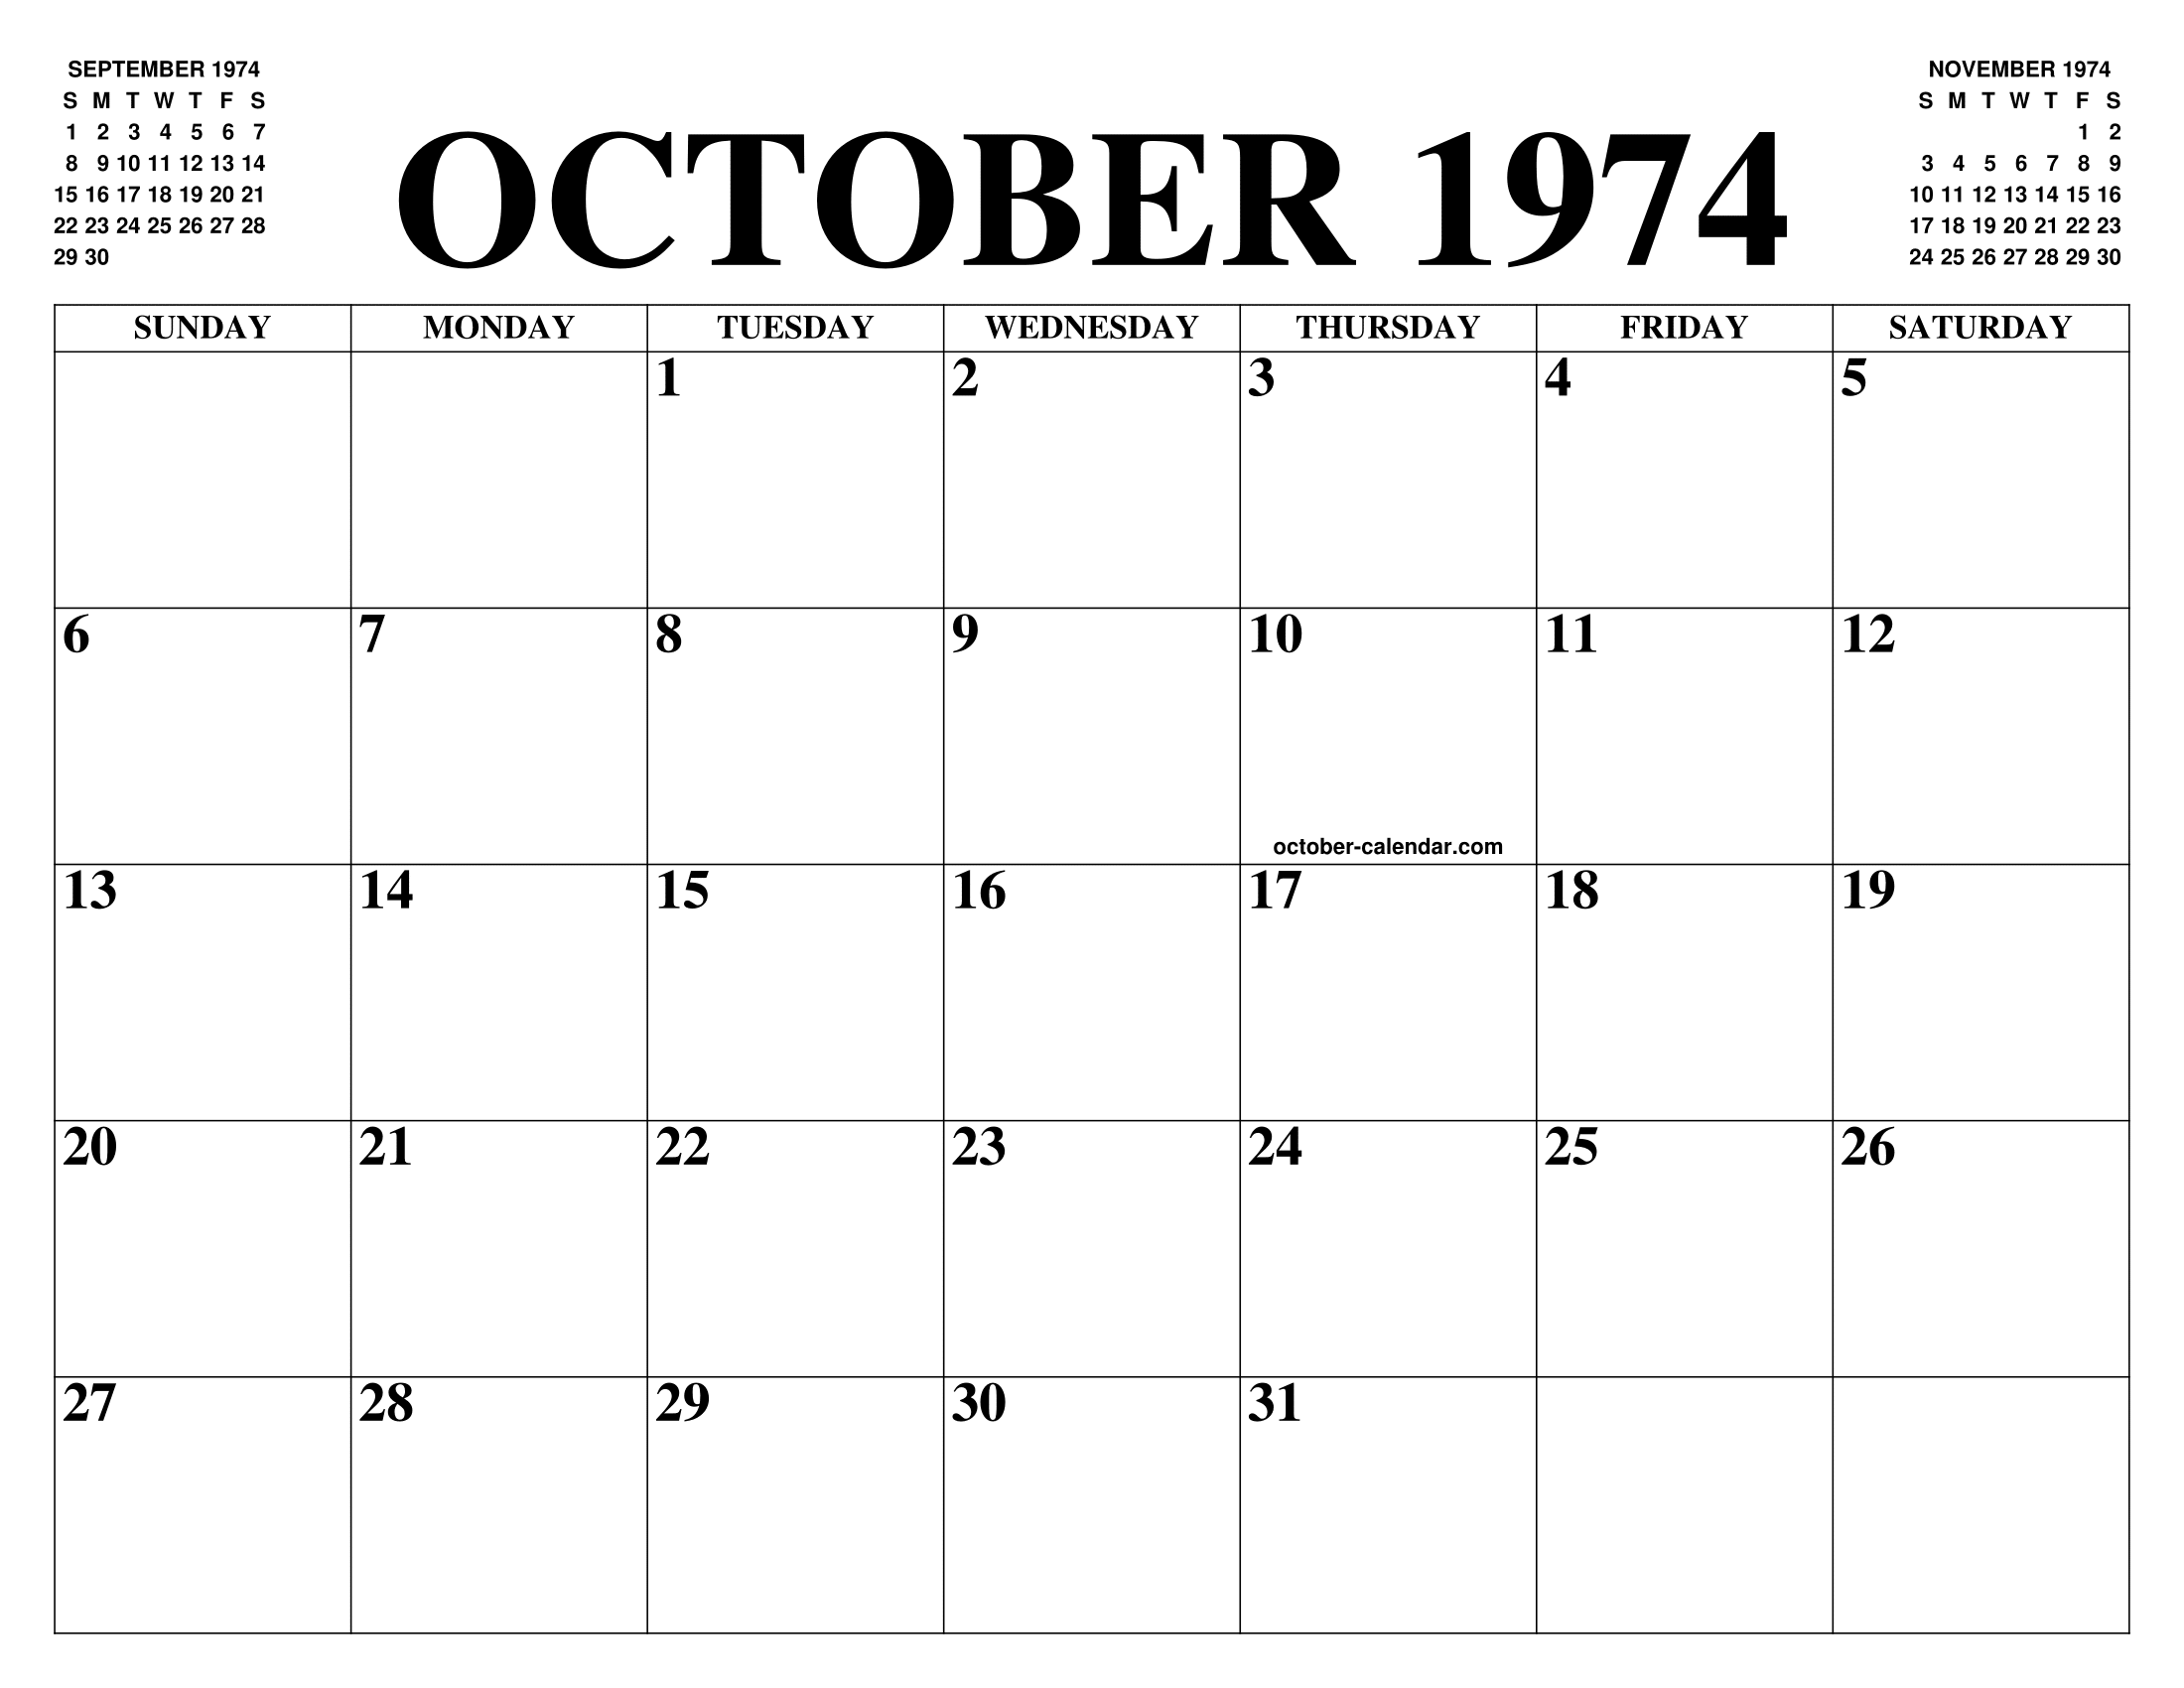 OCTOBER 1974 CALENDAR OF THE MONTH: FREE PRINTABLE OCTOBER CALENDAR OF